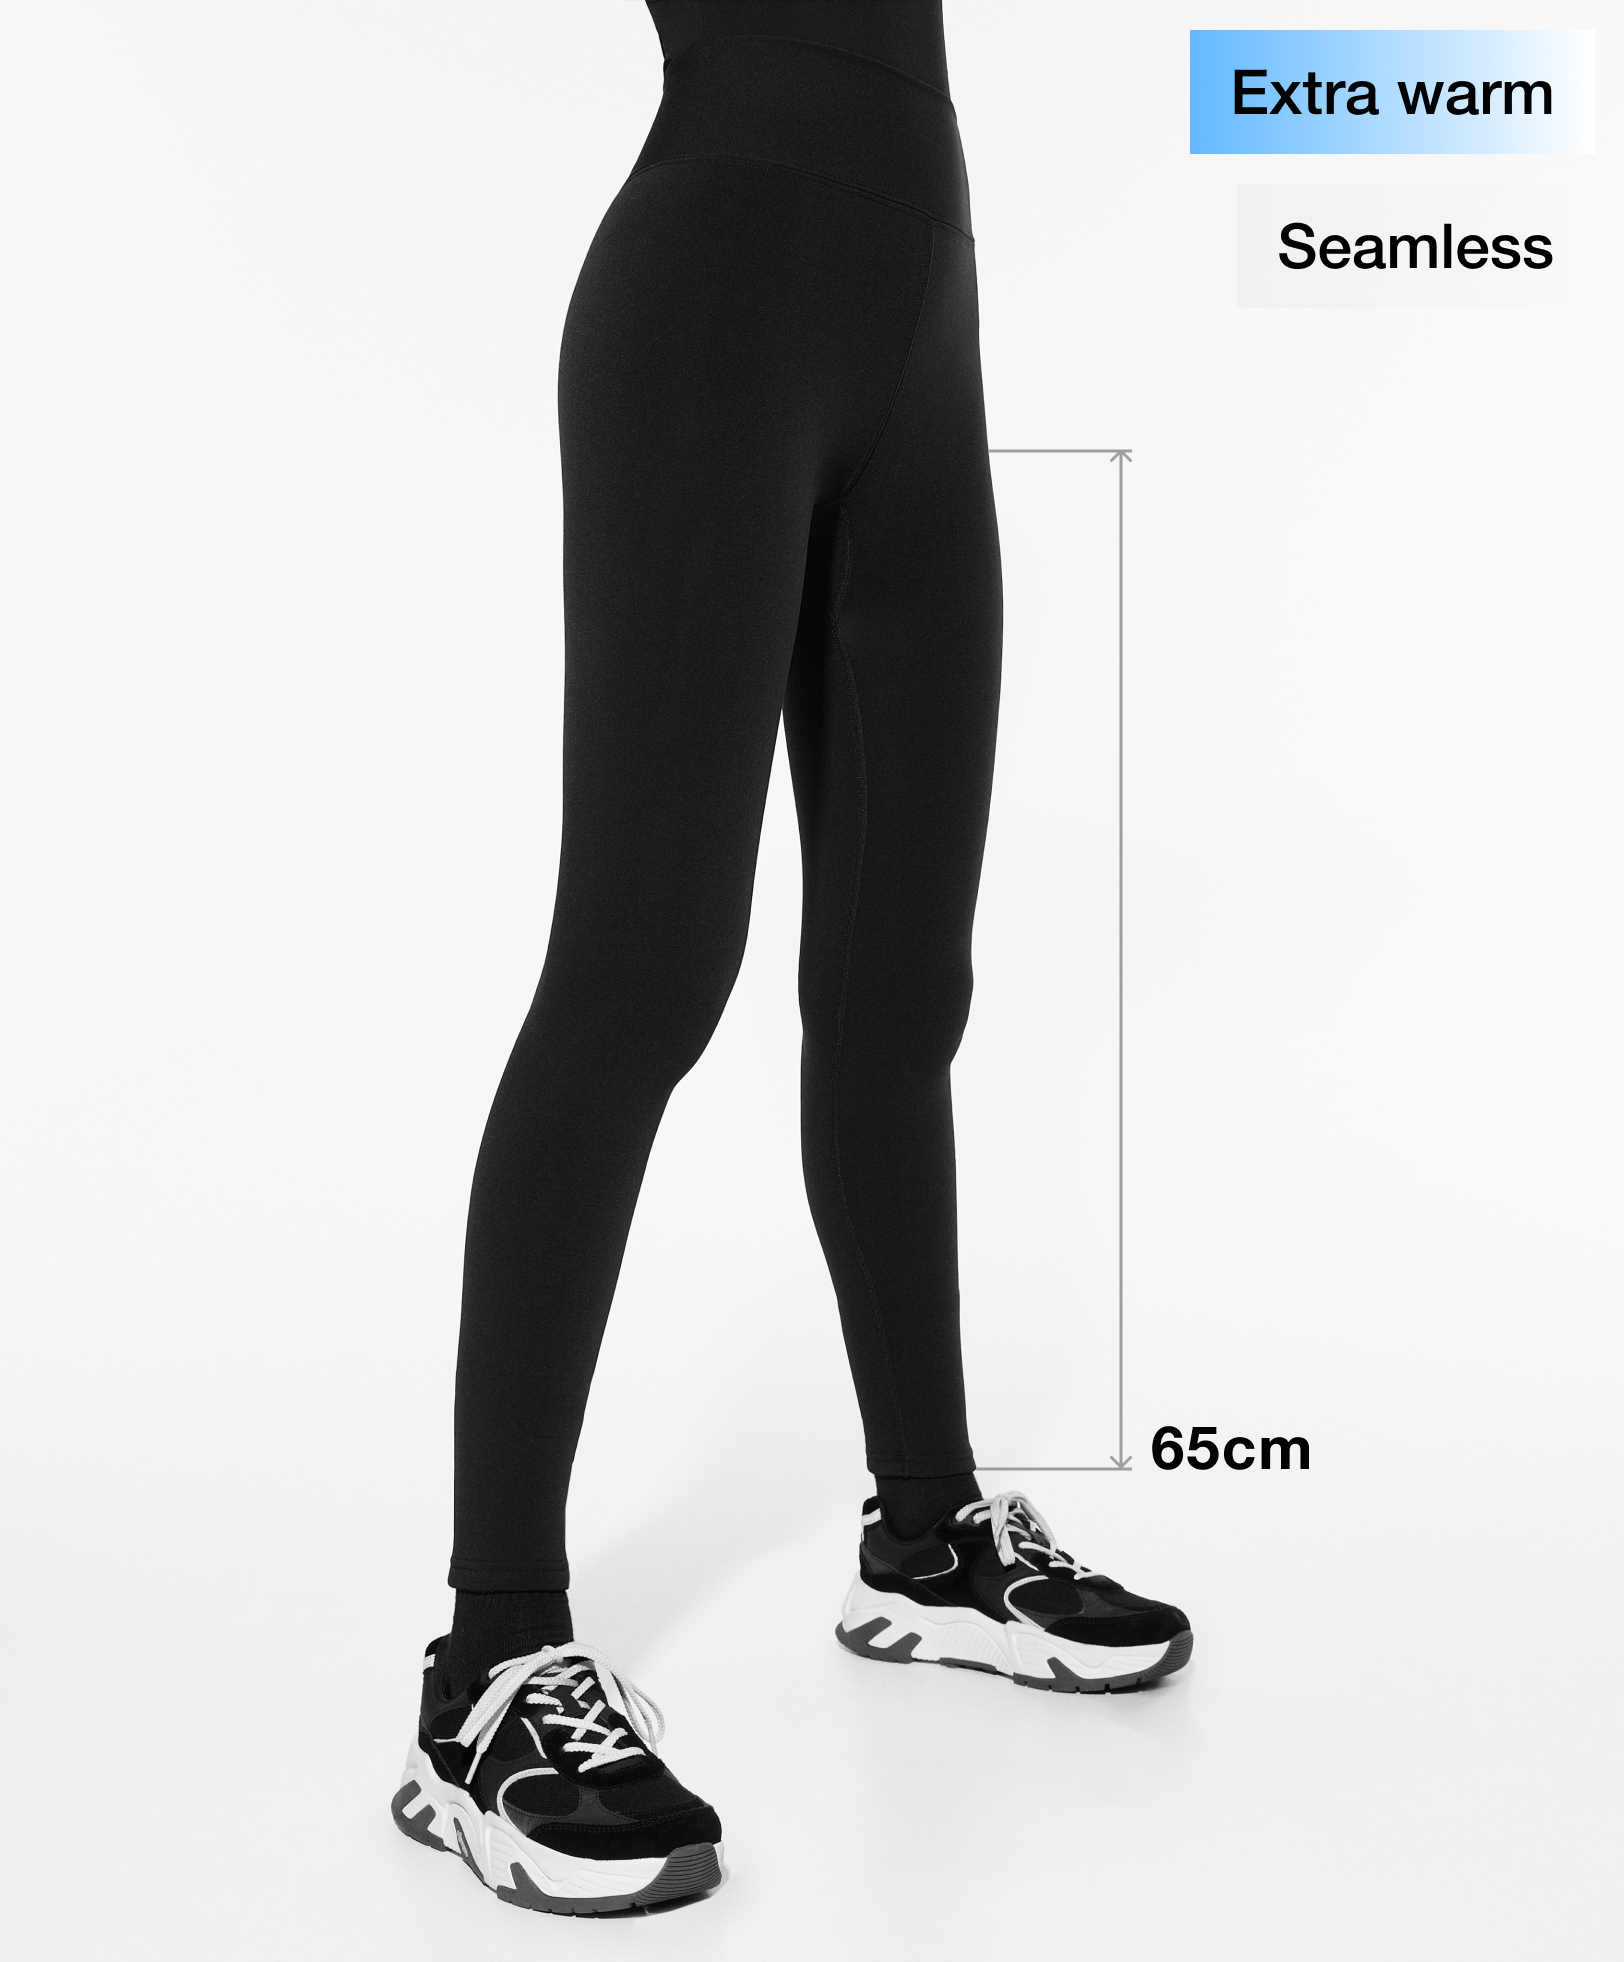 Extra warm seamless 65cm ankle-length leggings